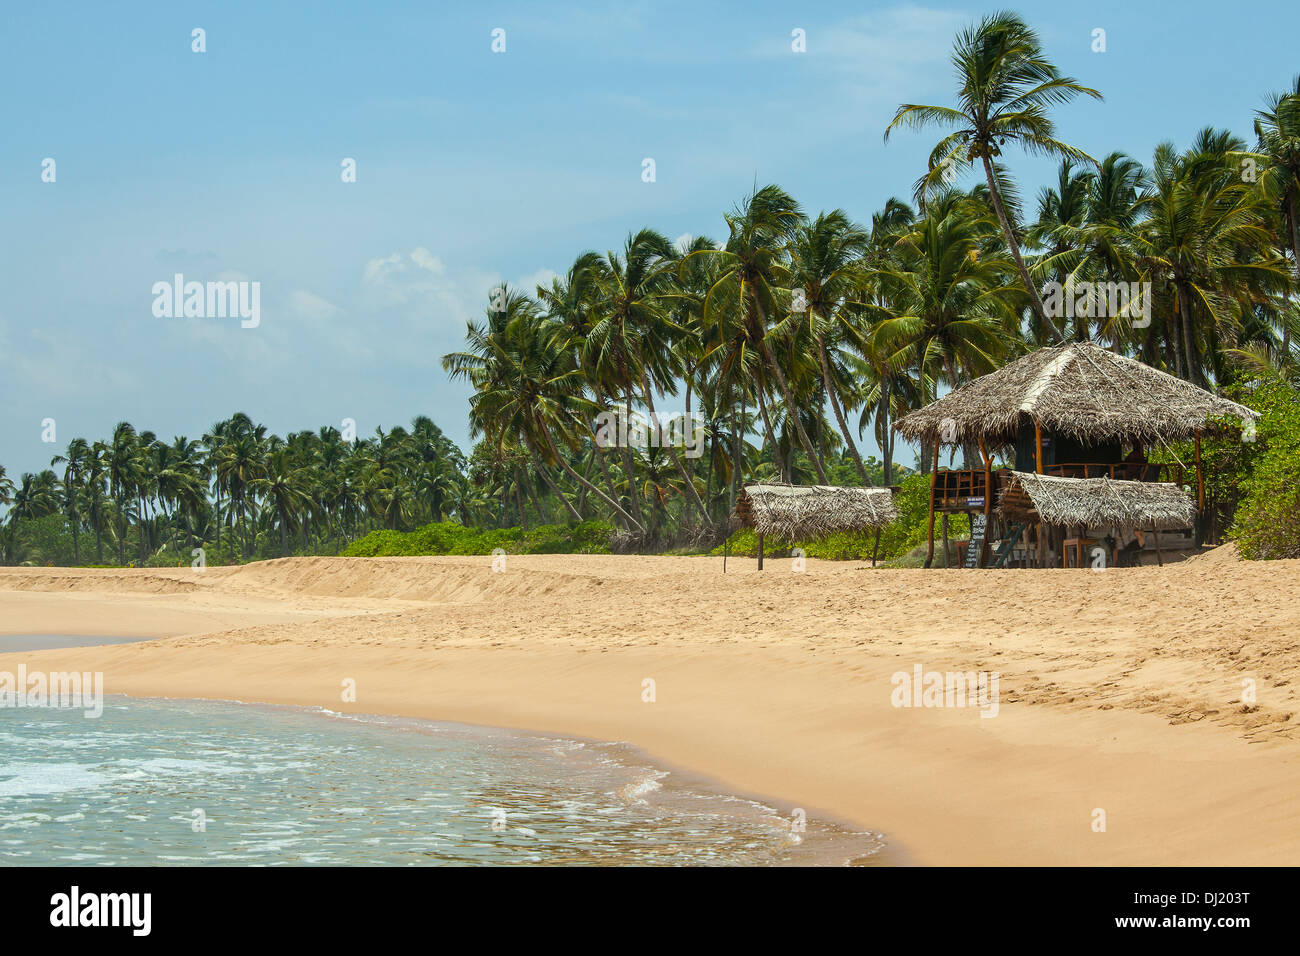 Rustic restaurant at tropical beach in Sri Lanka Stock Photo